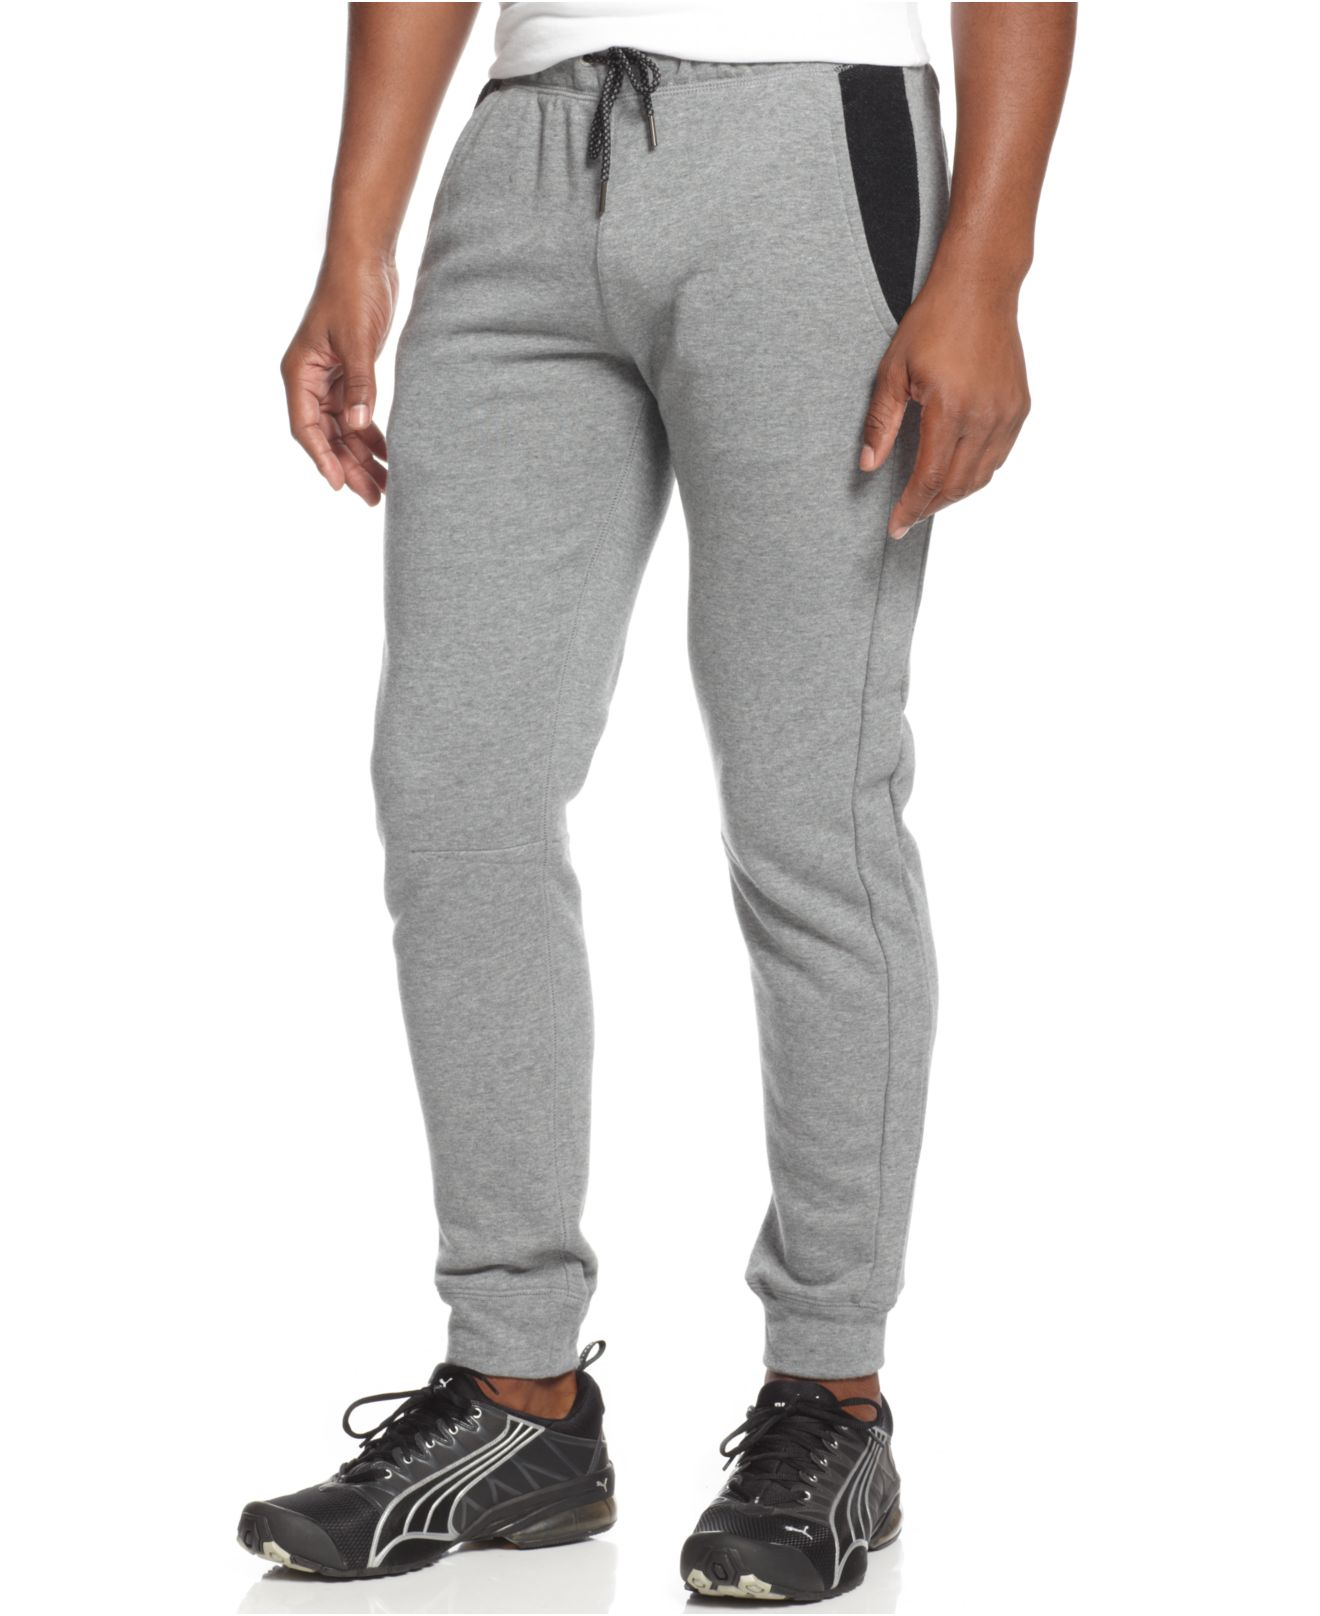 Lyst - Puma Fleece Jogger Pants in Gray for Men